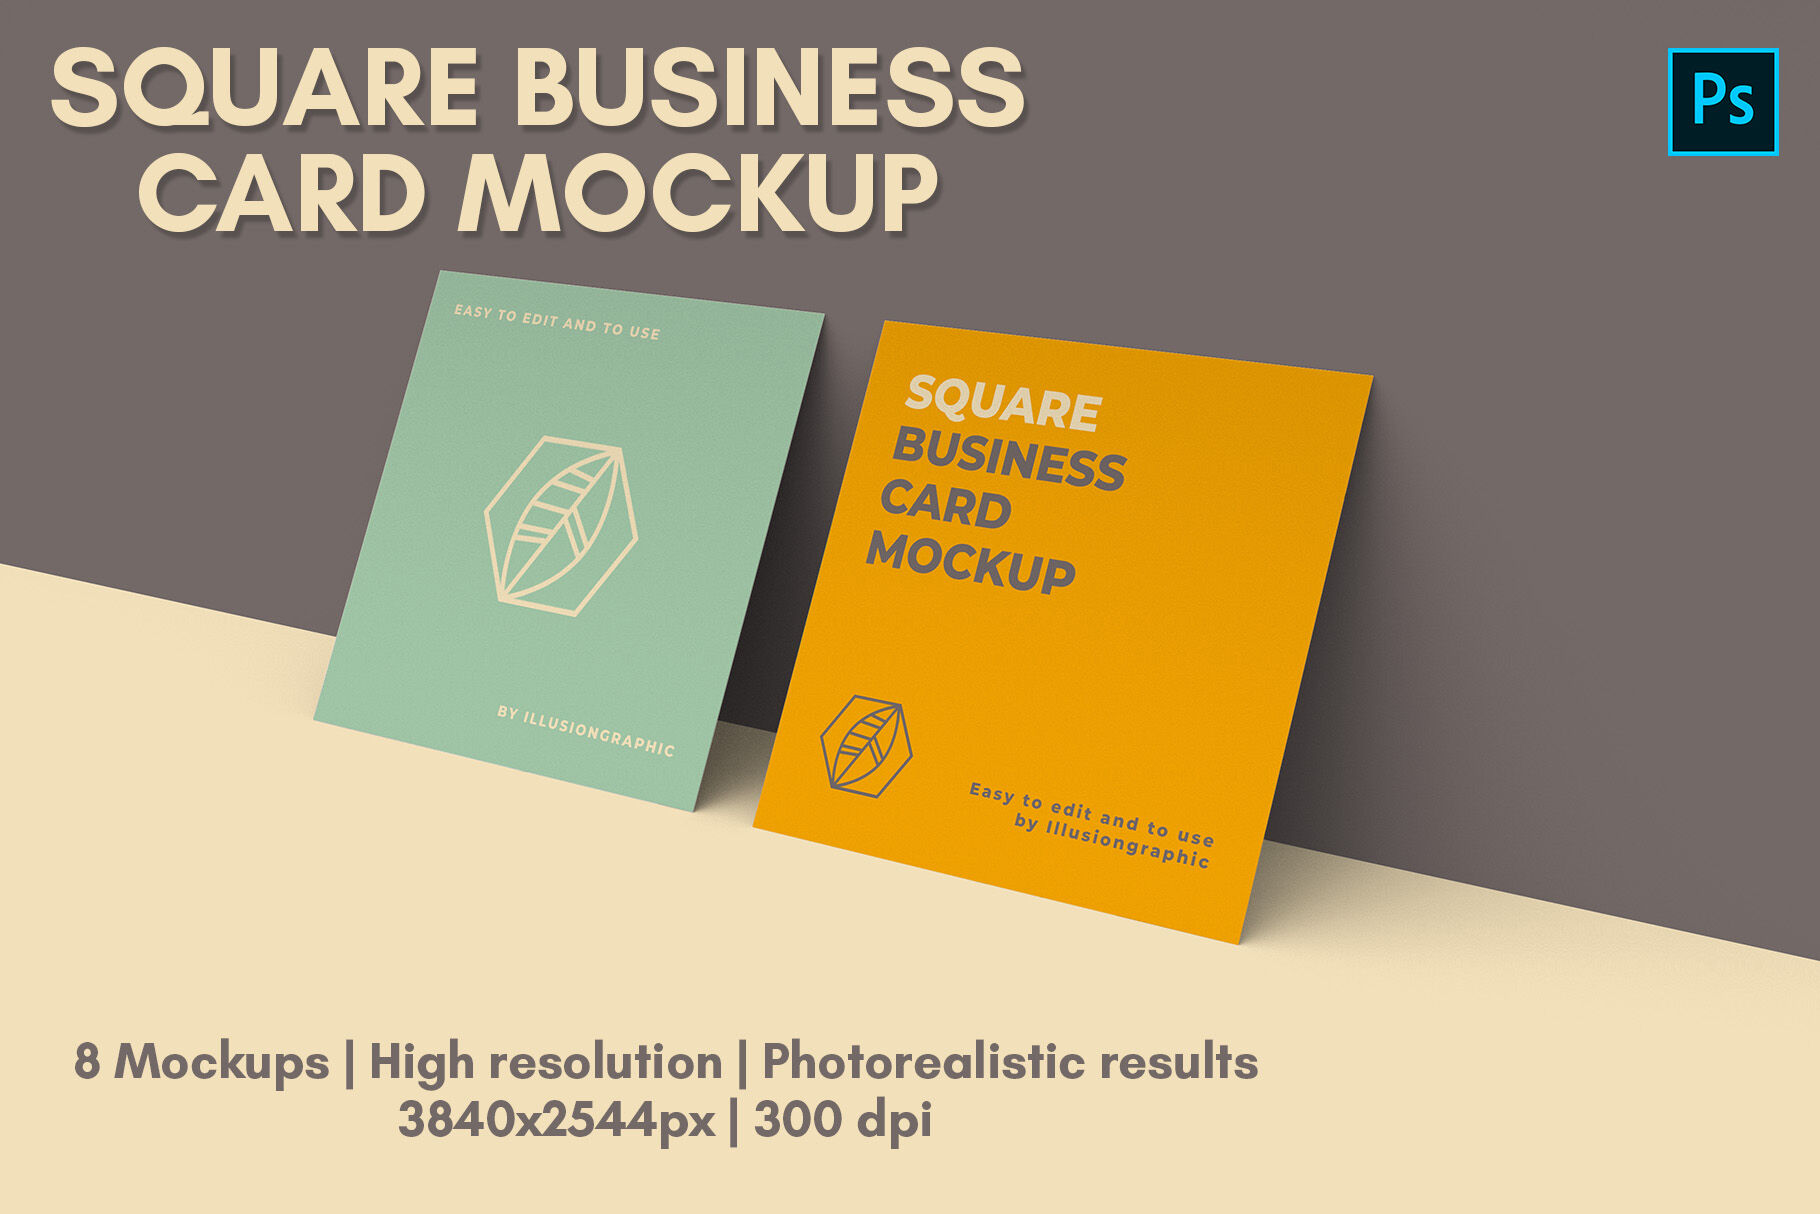 Download Times Square Mockup Psd - Free Mockups | PSD Template | Design Assets